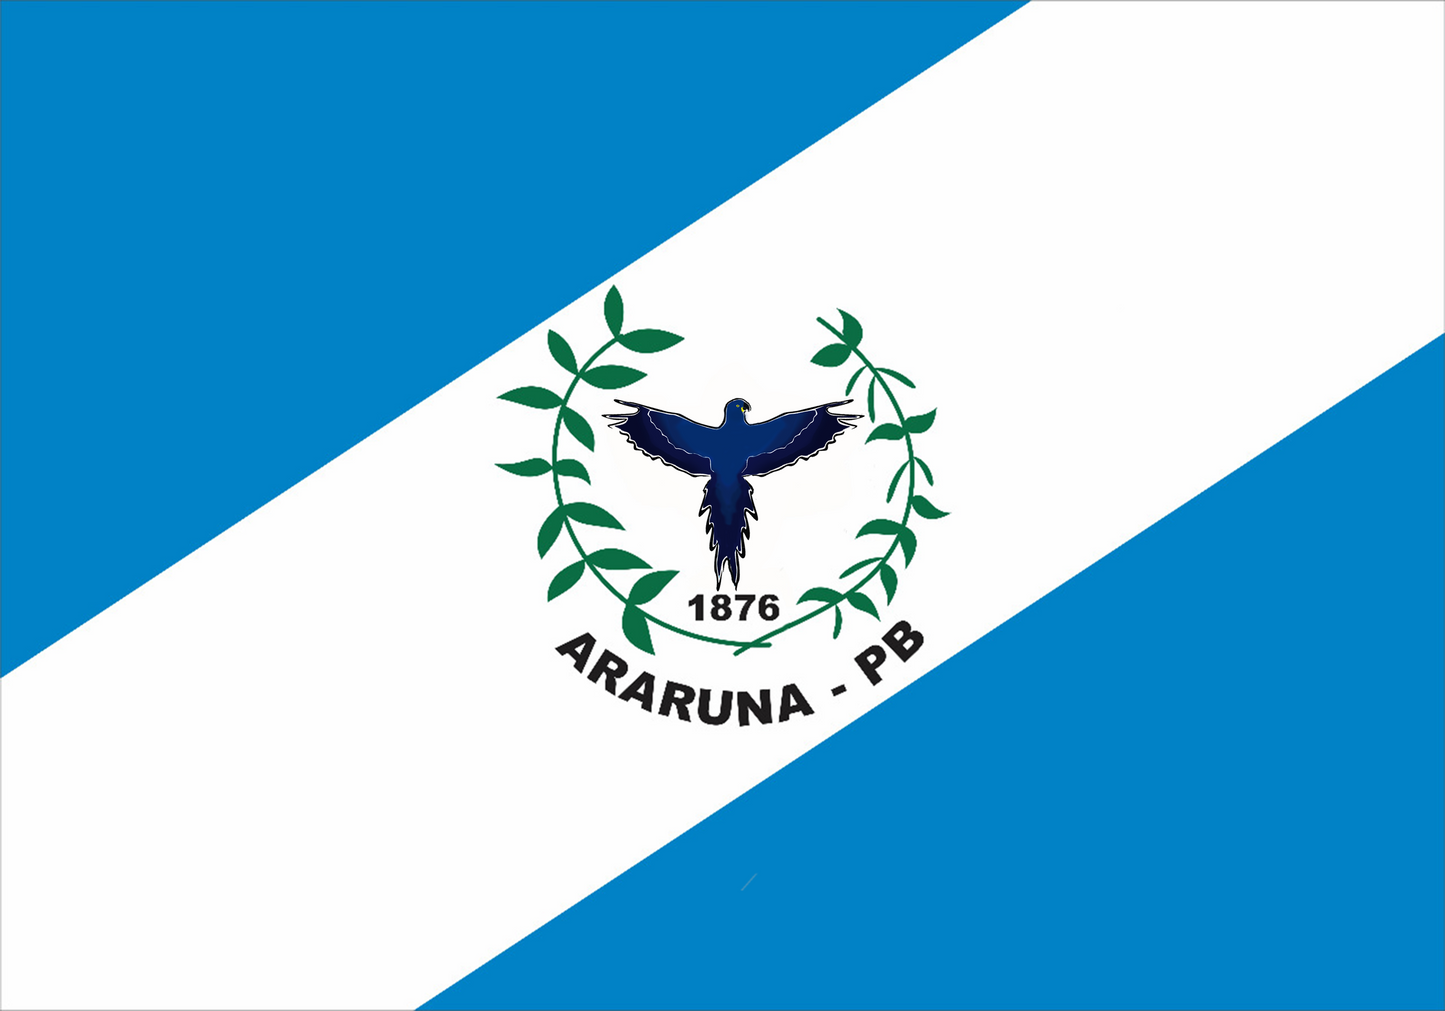 Imagem da Bandeira Araruna